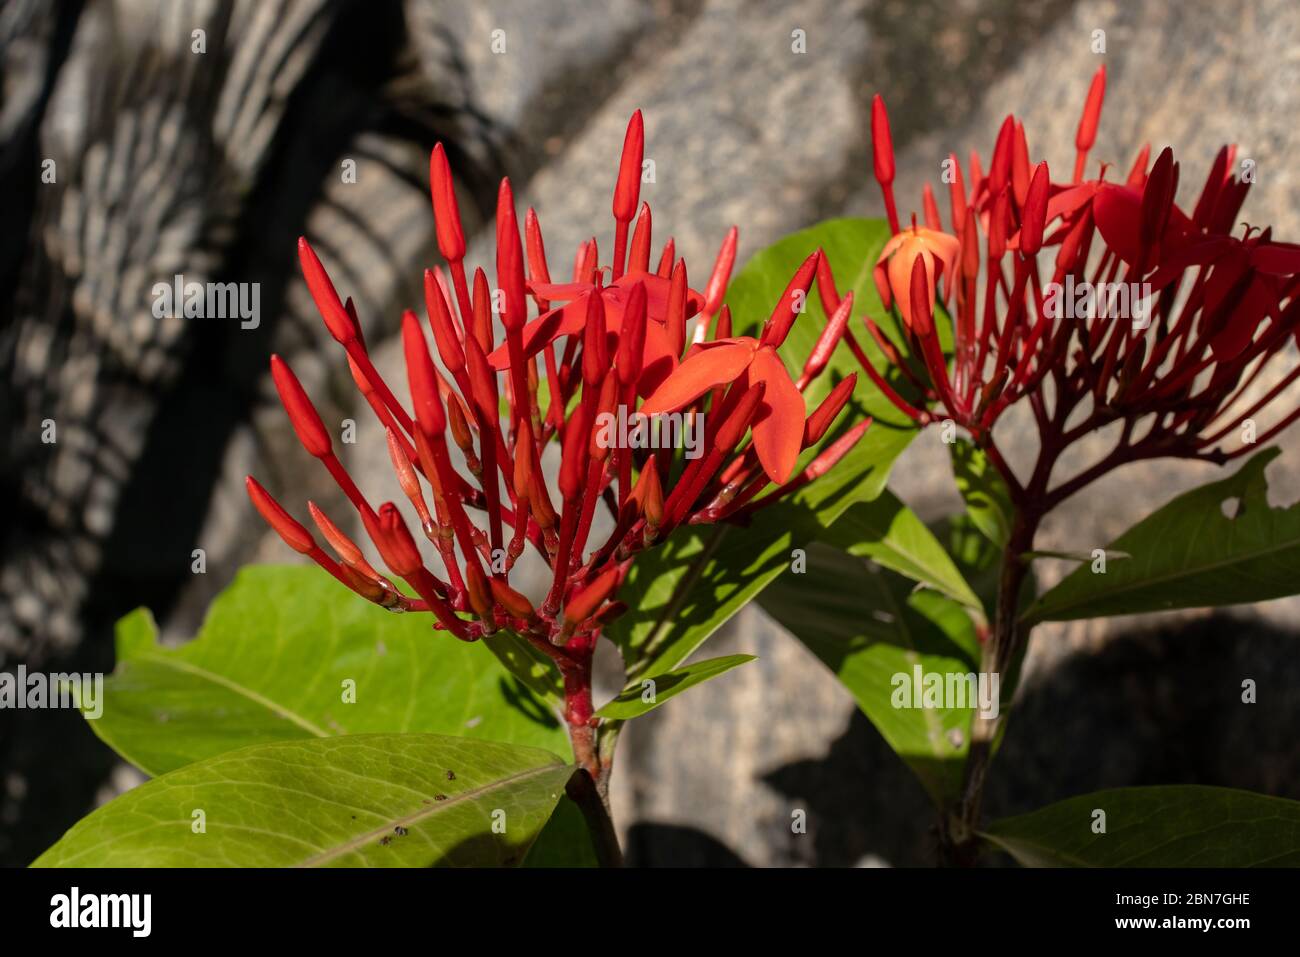 Flower, Ixora coccinea, common flowering shrub native to southern India, Bangladesh and Sri Lanka, still in bloom, Areal, Rio de Janeiro, Brazil Stock Photo